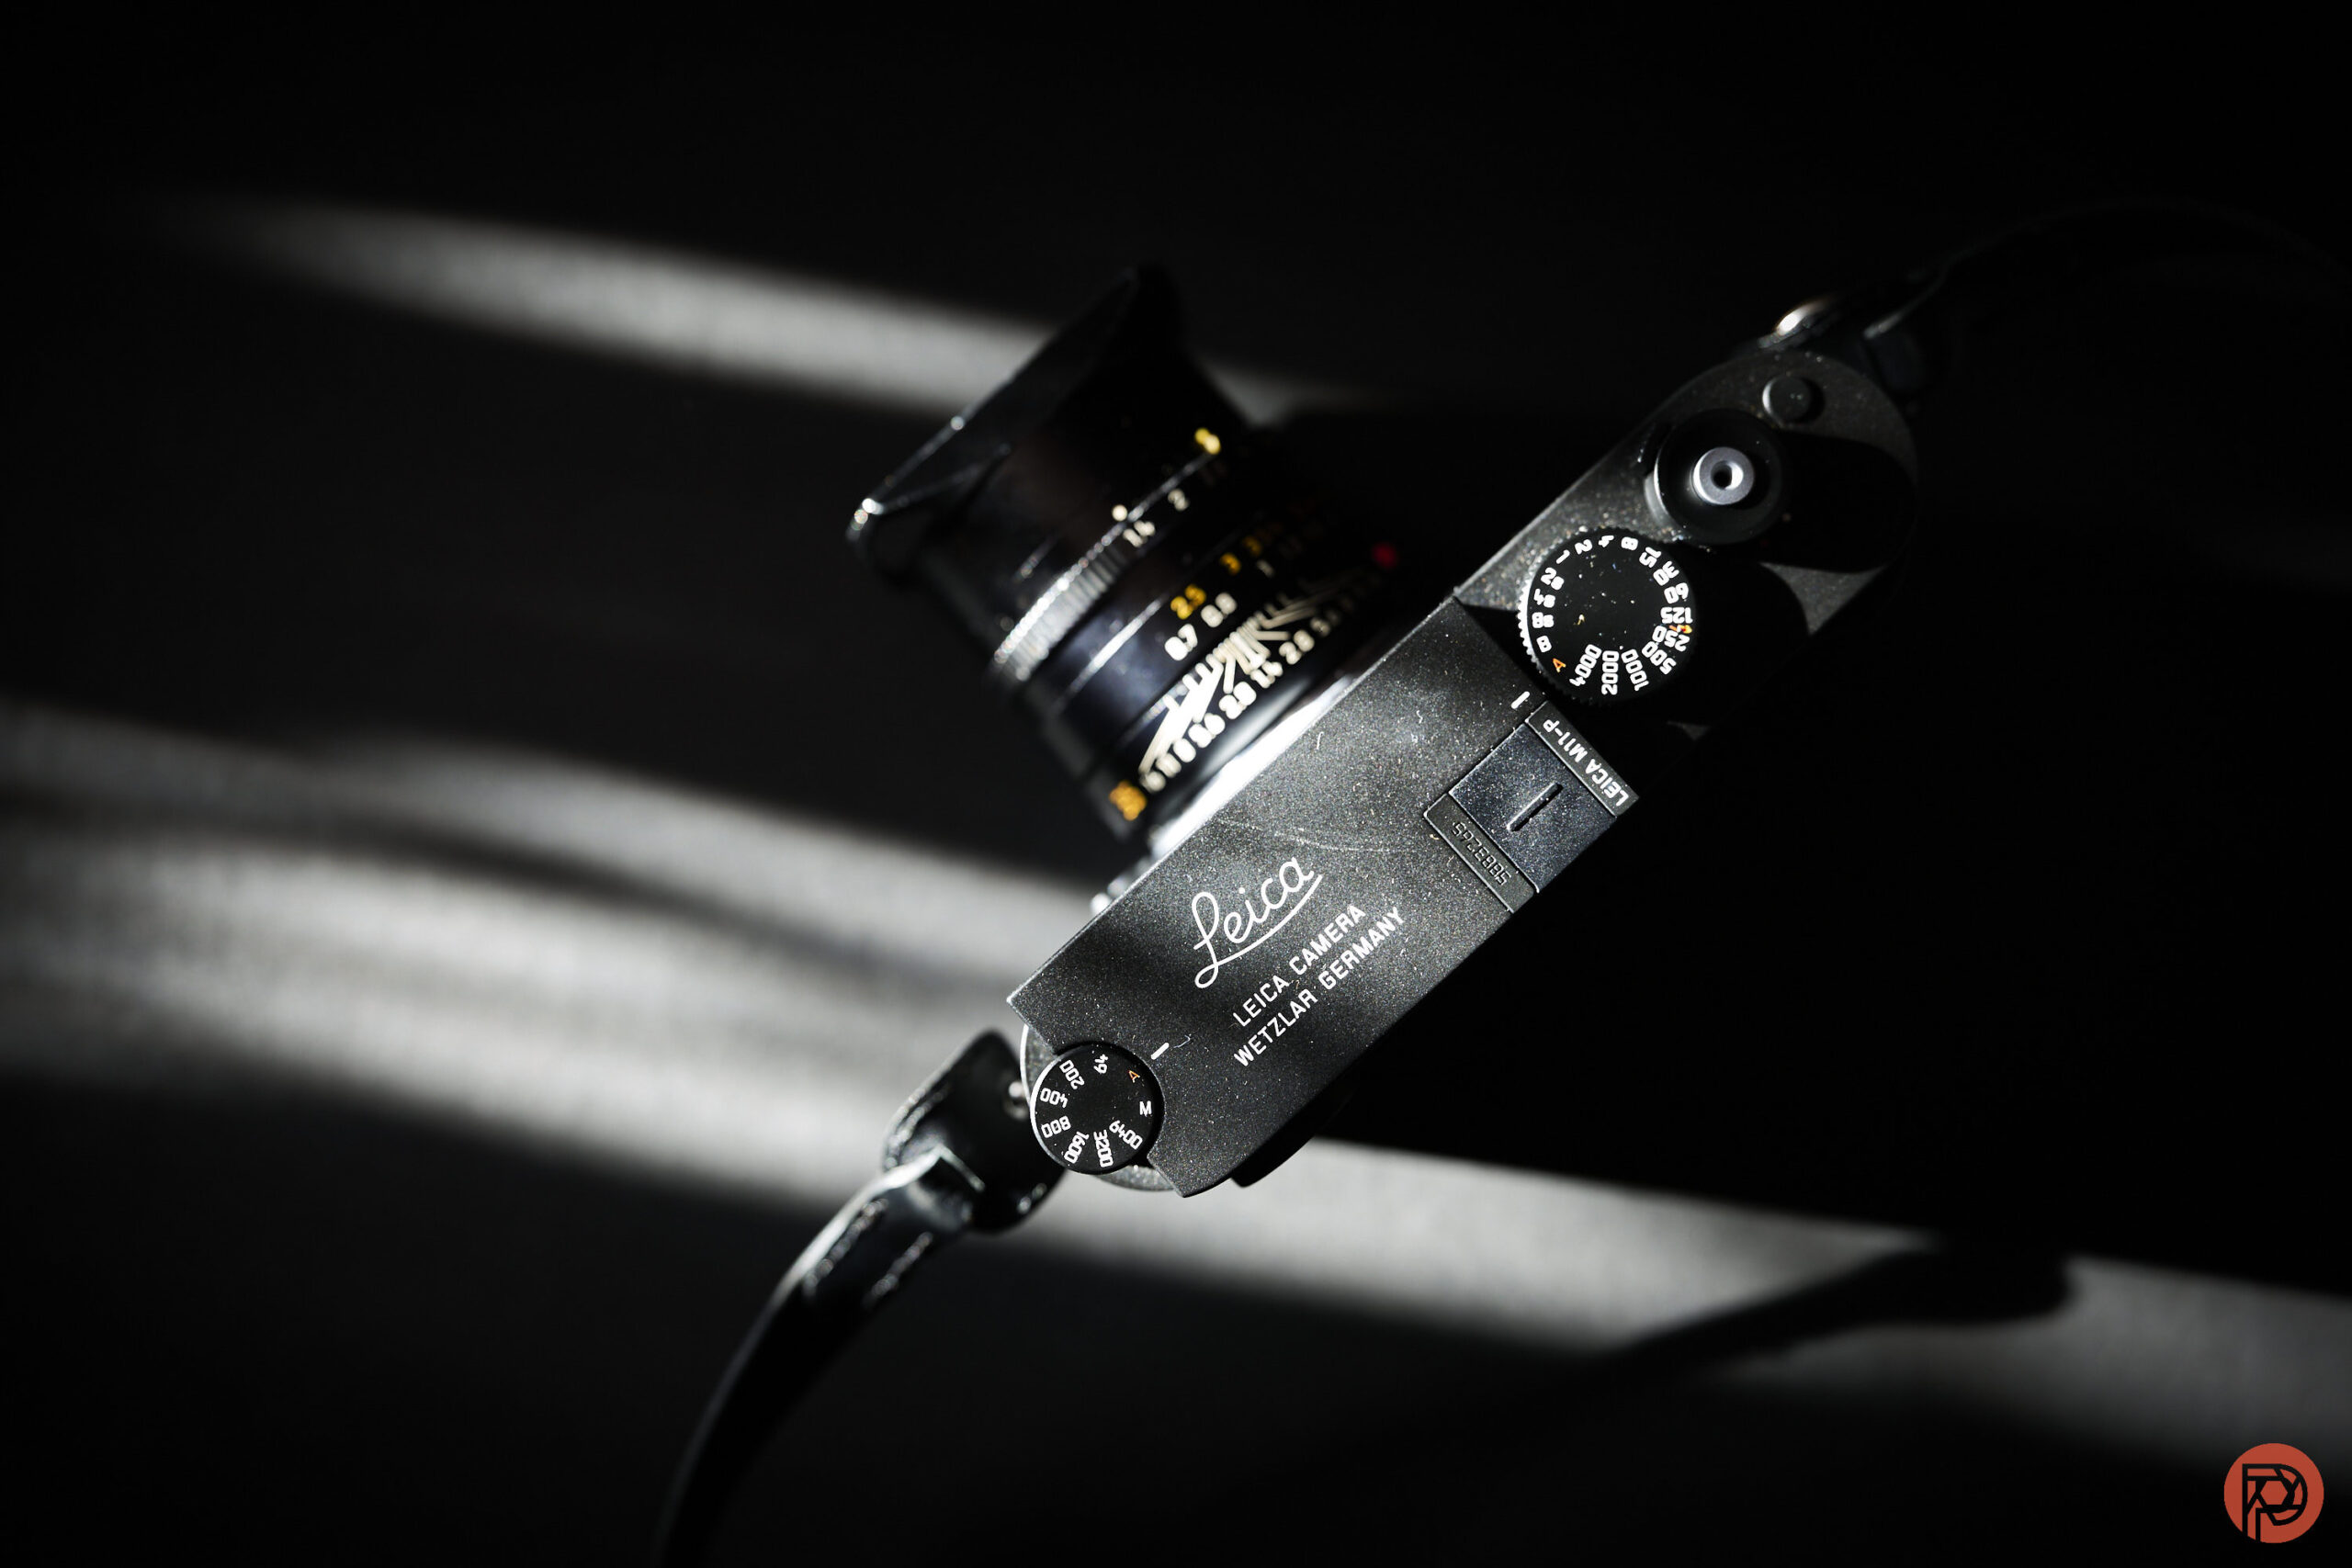 Chris Gampat The Phoblographer Leica M11p review 2.51-125s400 2